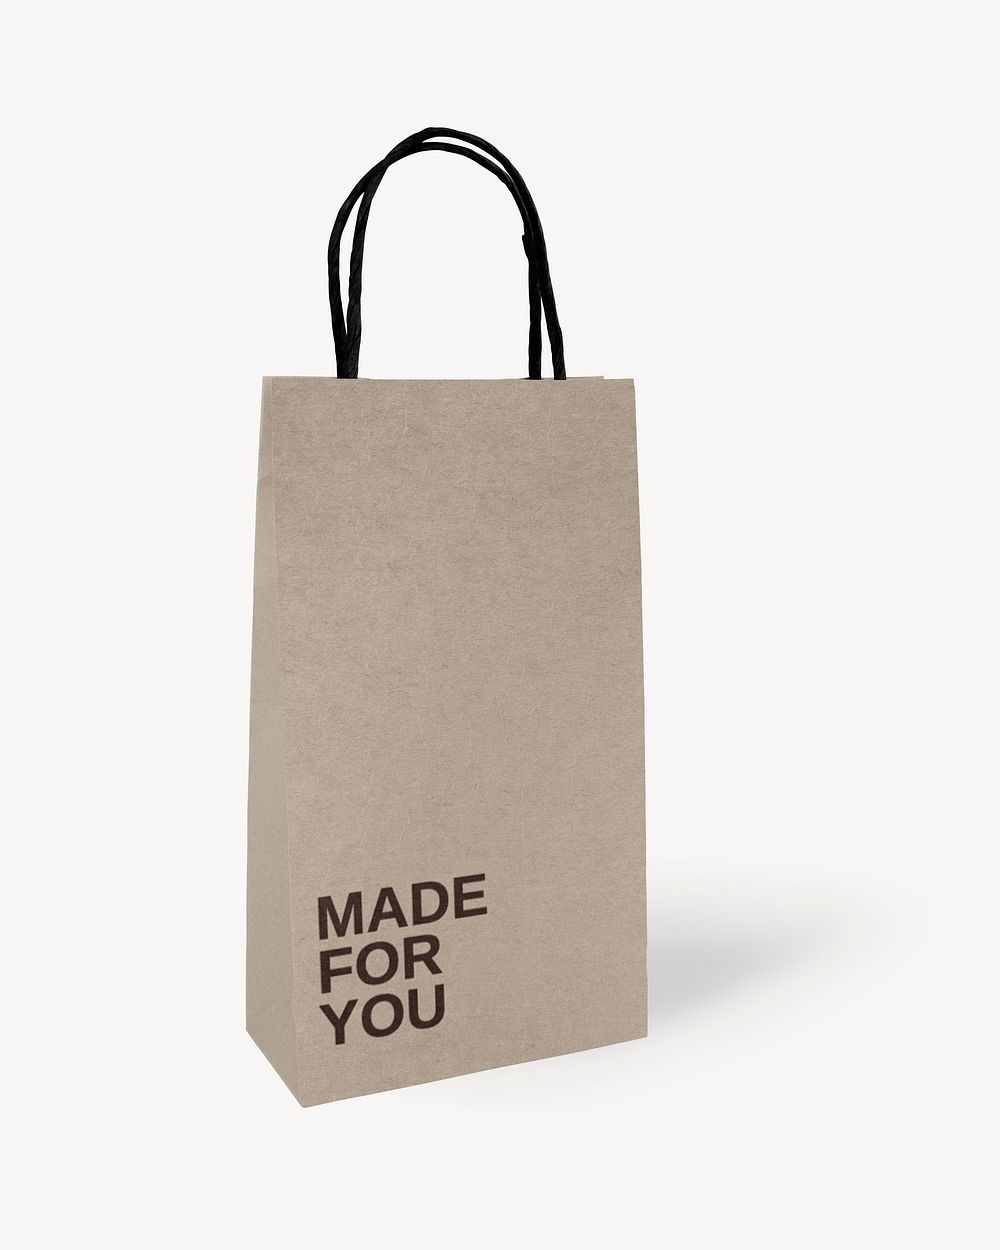 Shopping bag mockup, business product psd